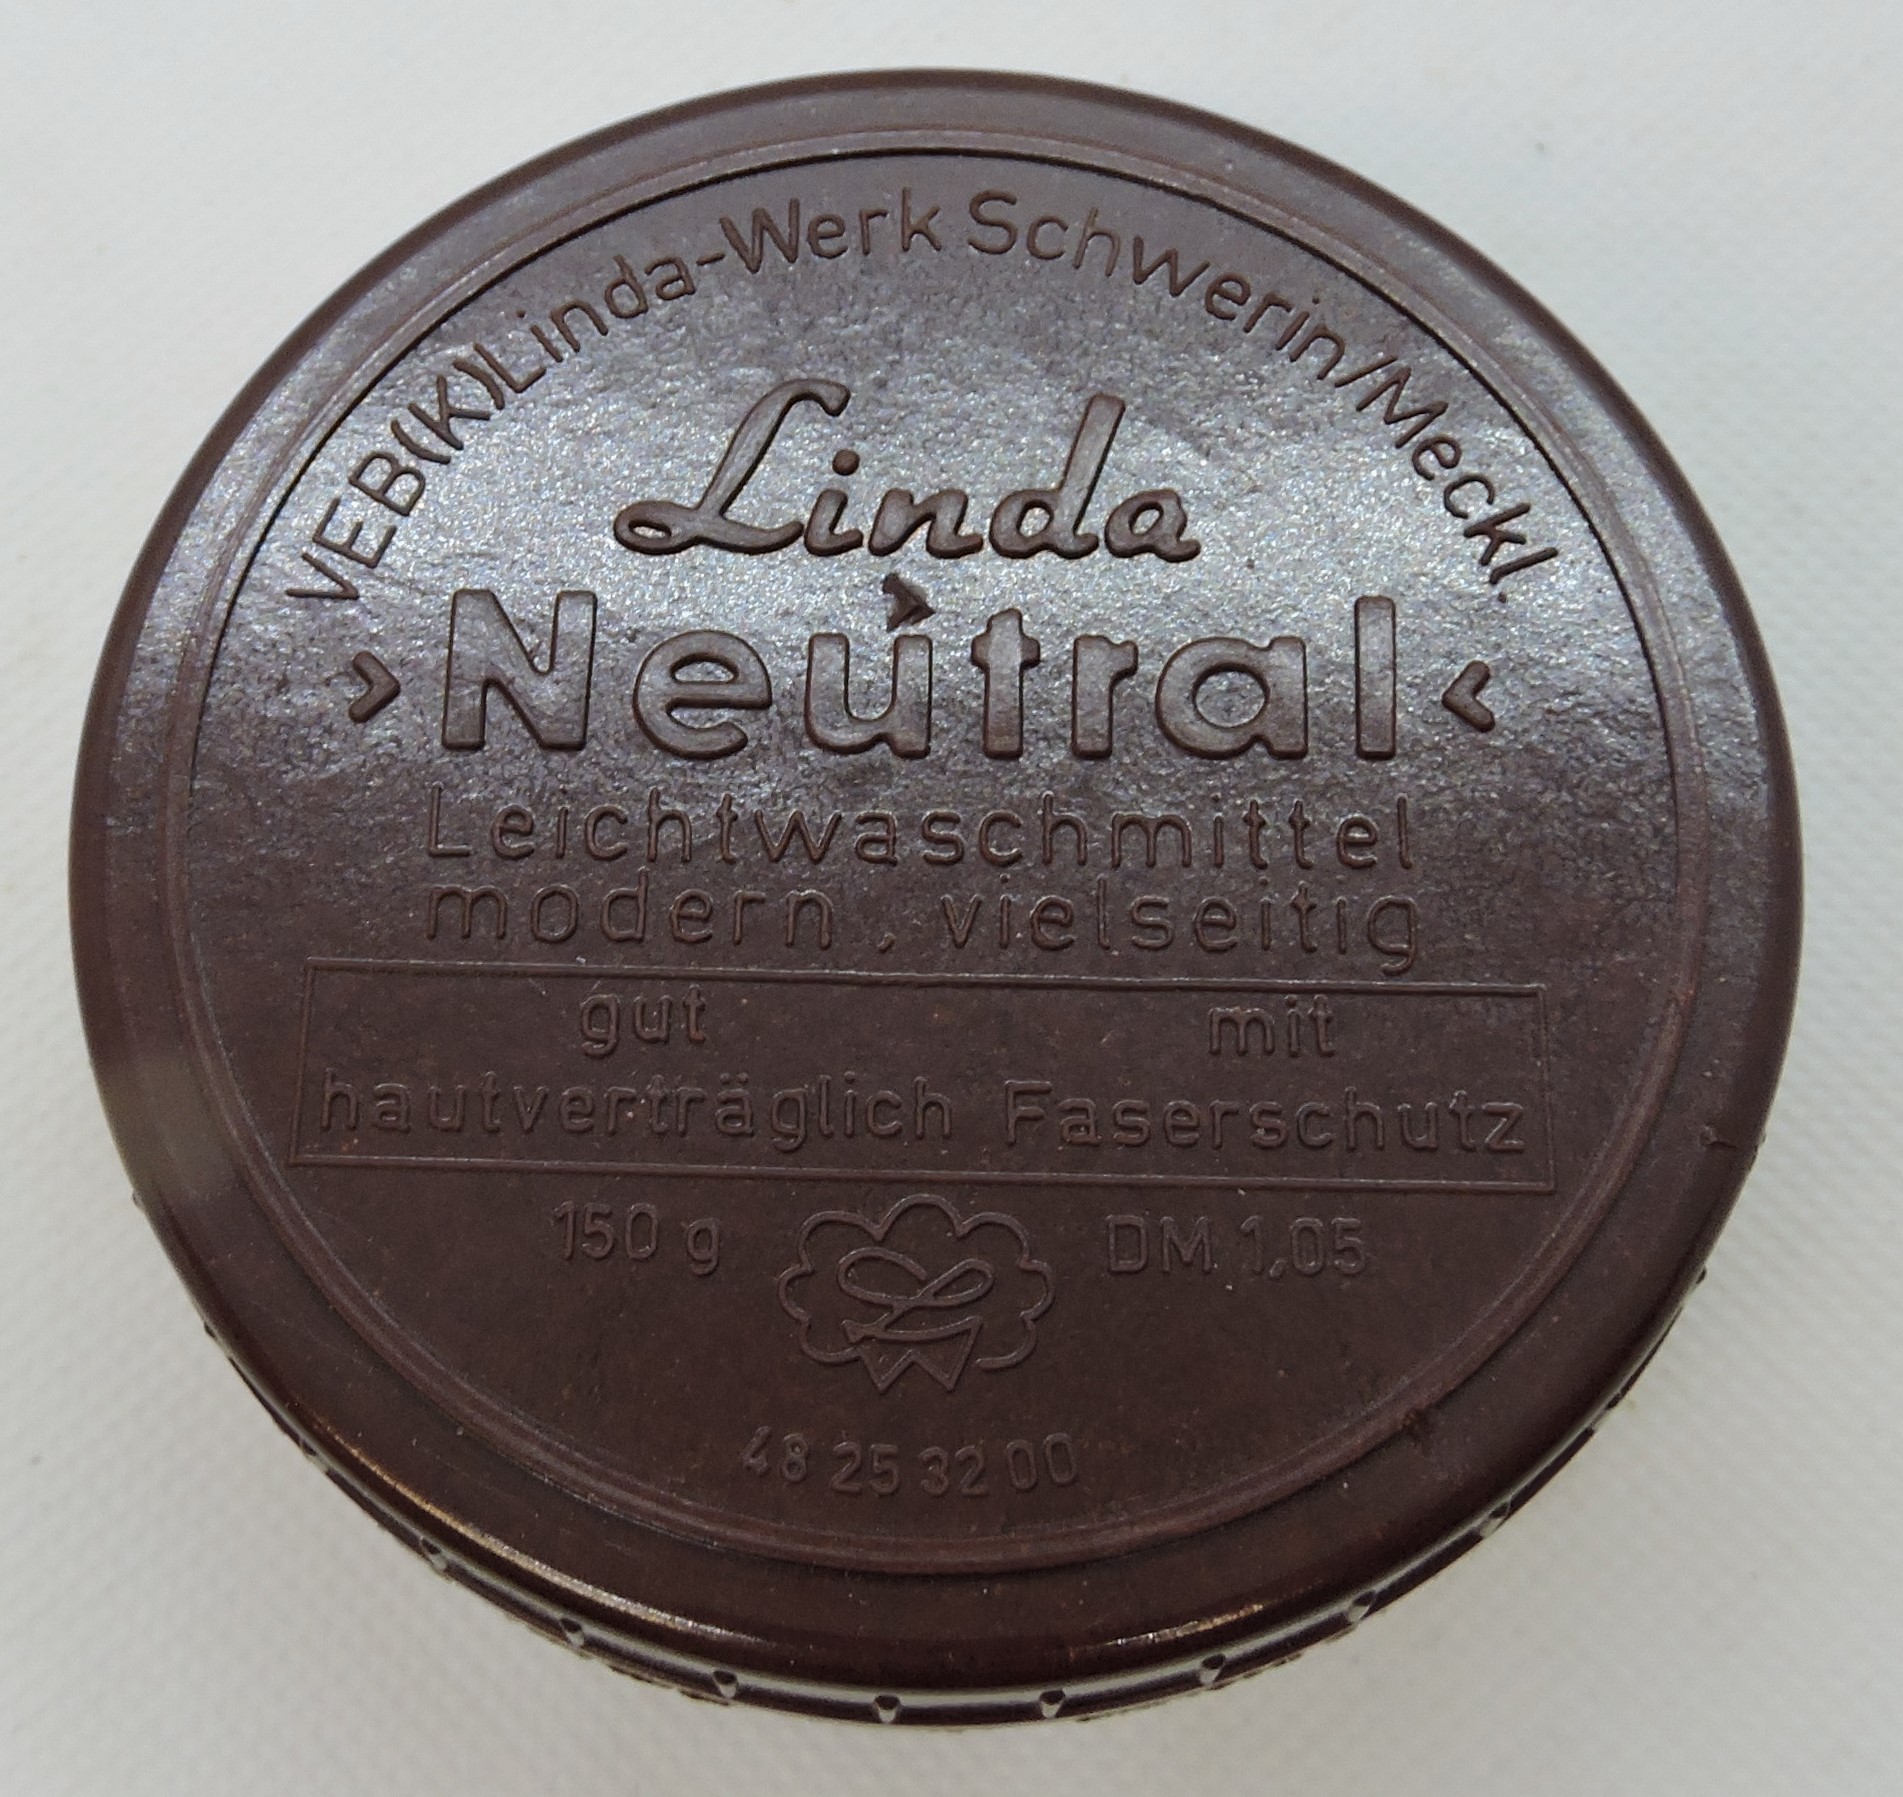 Linda "neutral" - Leichtwaschmittel (Heimatverein Teltow CC BY-NC-SA)